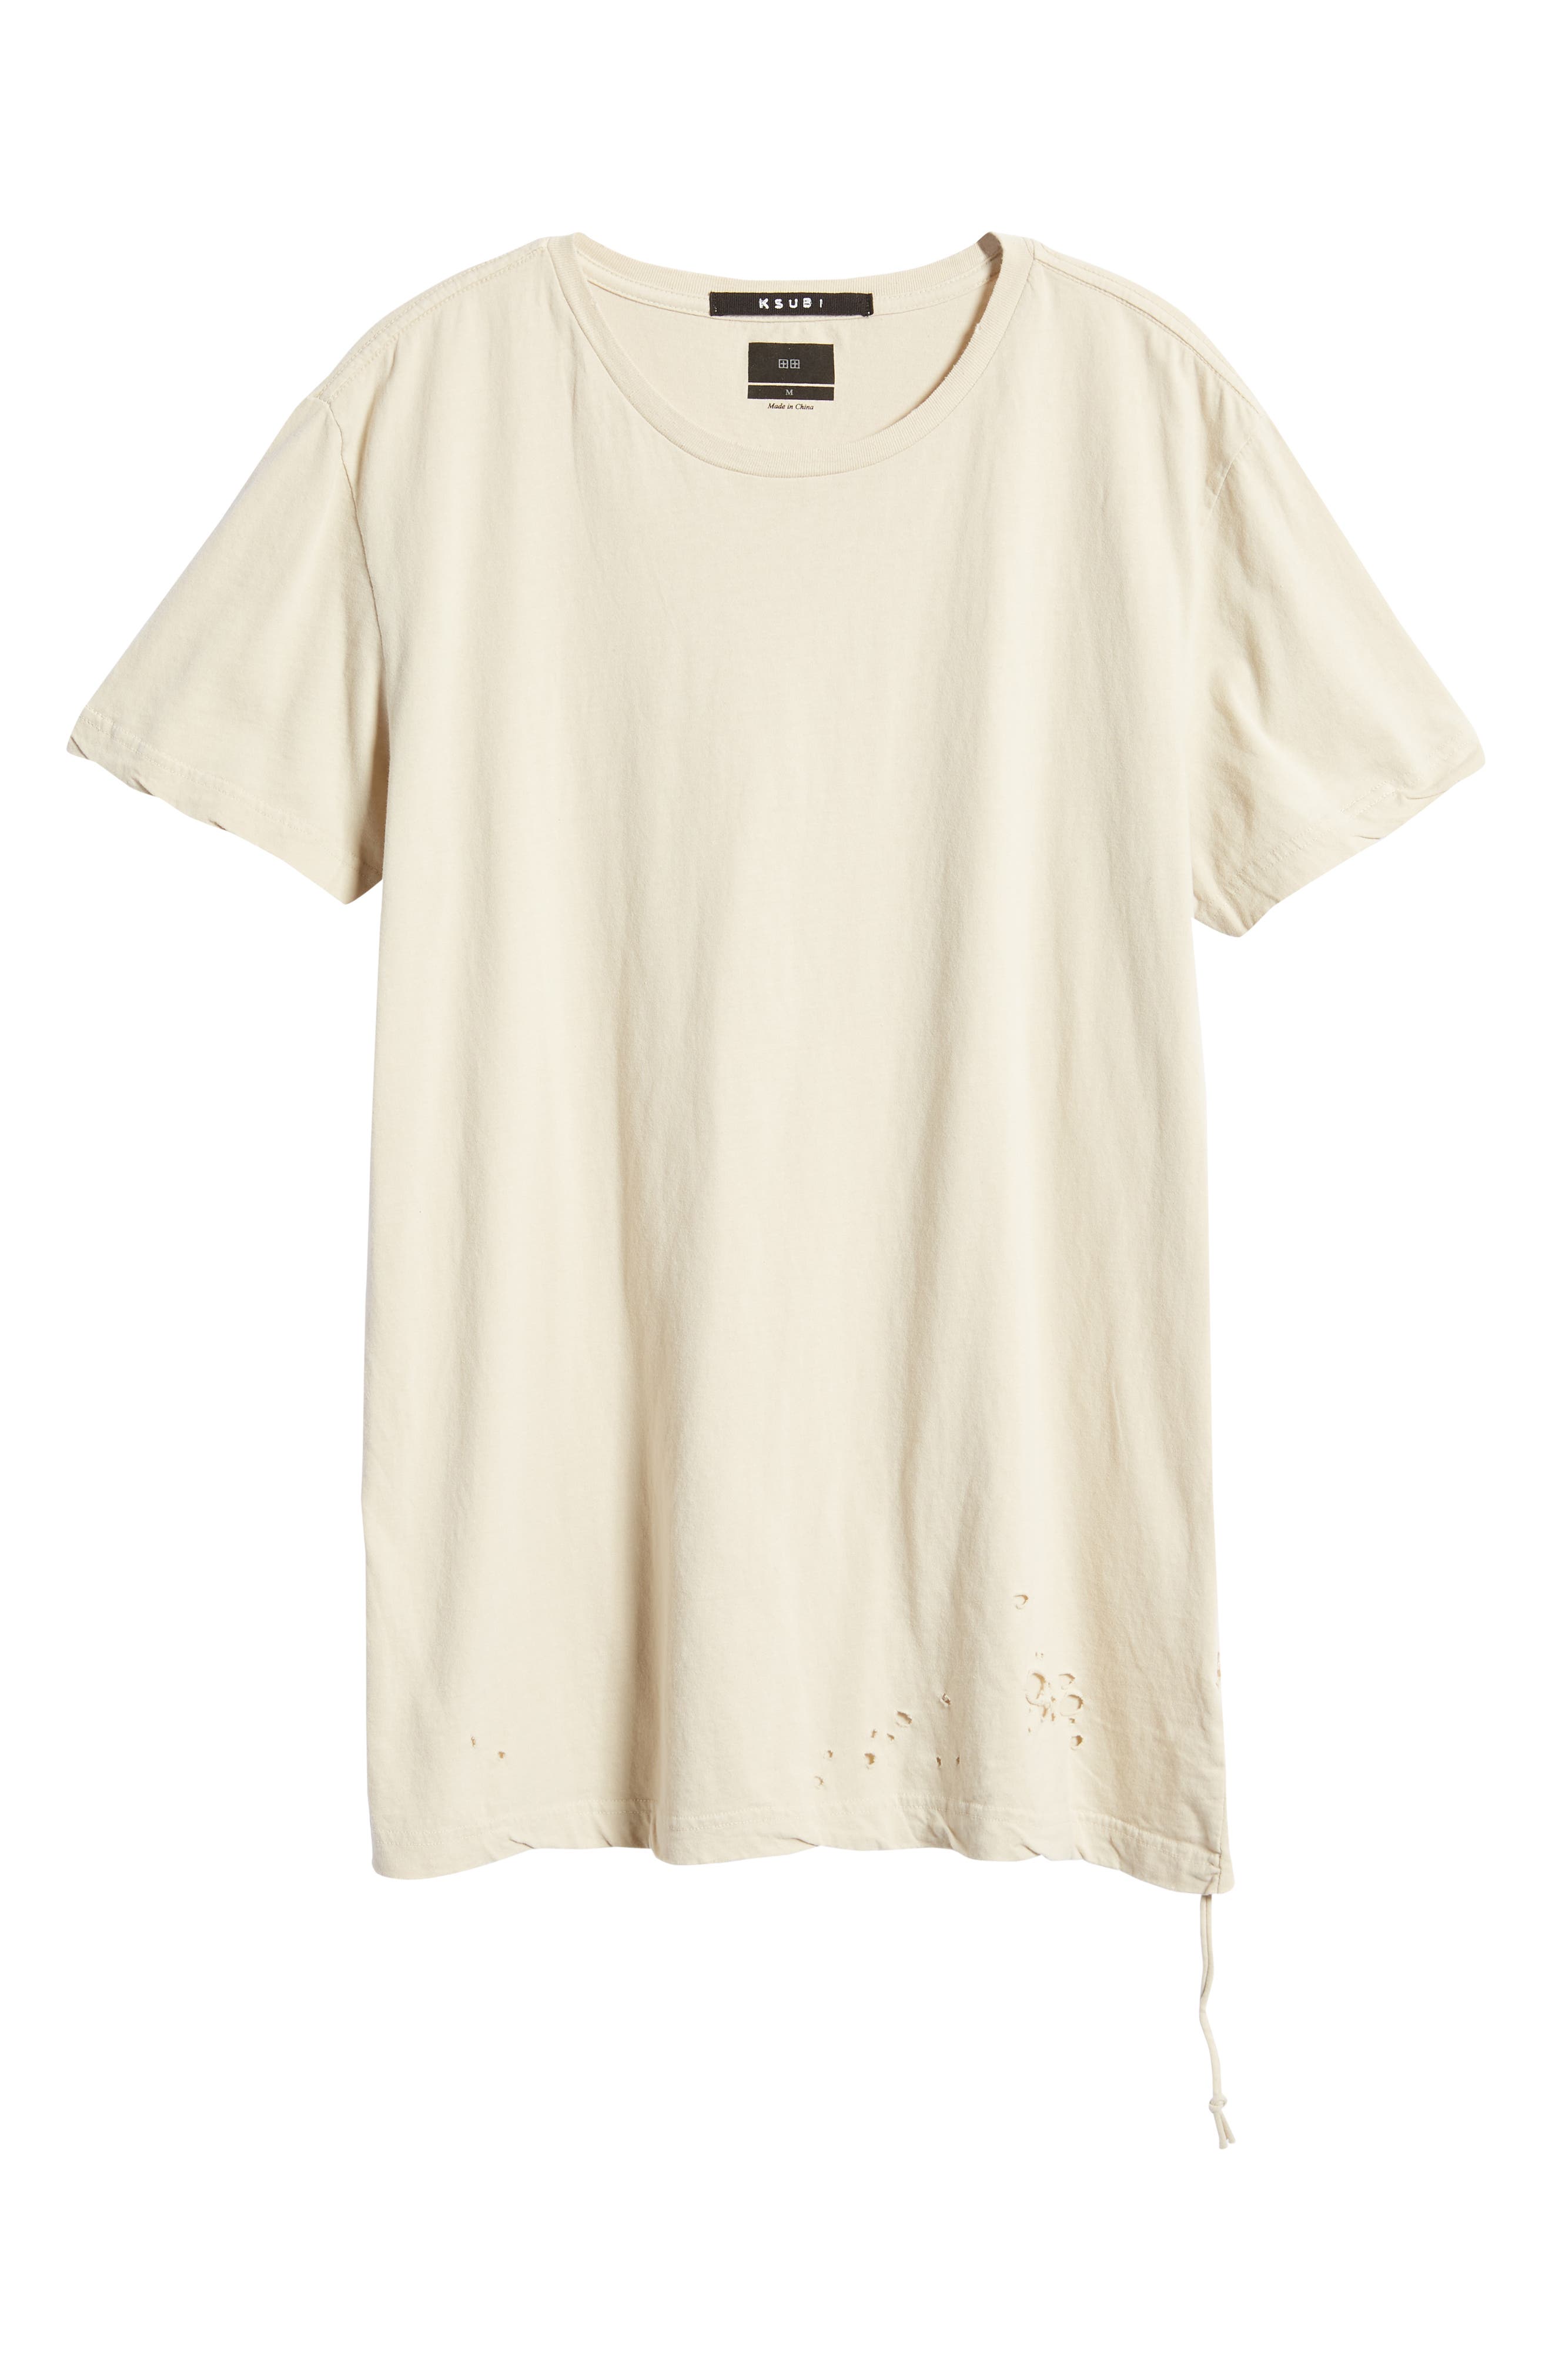 Ksubi Distressed Longline T-Shirt in Tan at Nordstrom, Size Medium